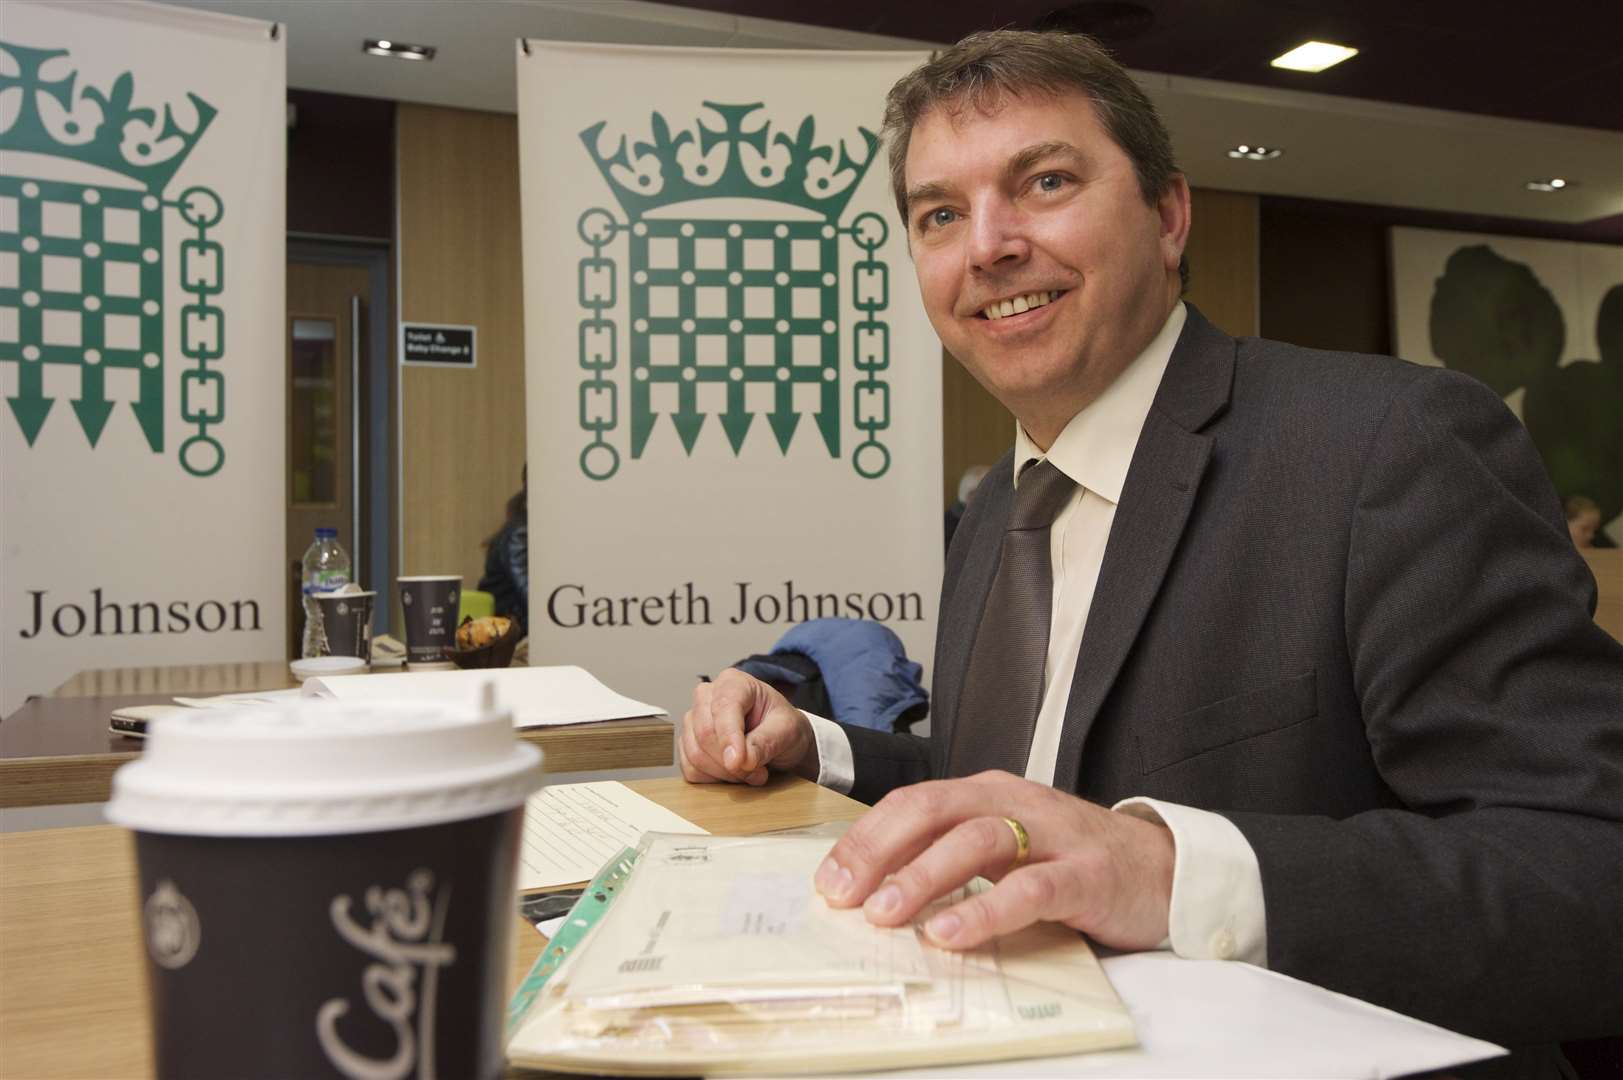 Gareth Johnson has won the Dartford seat